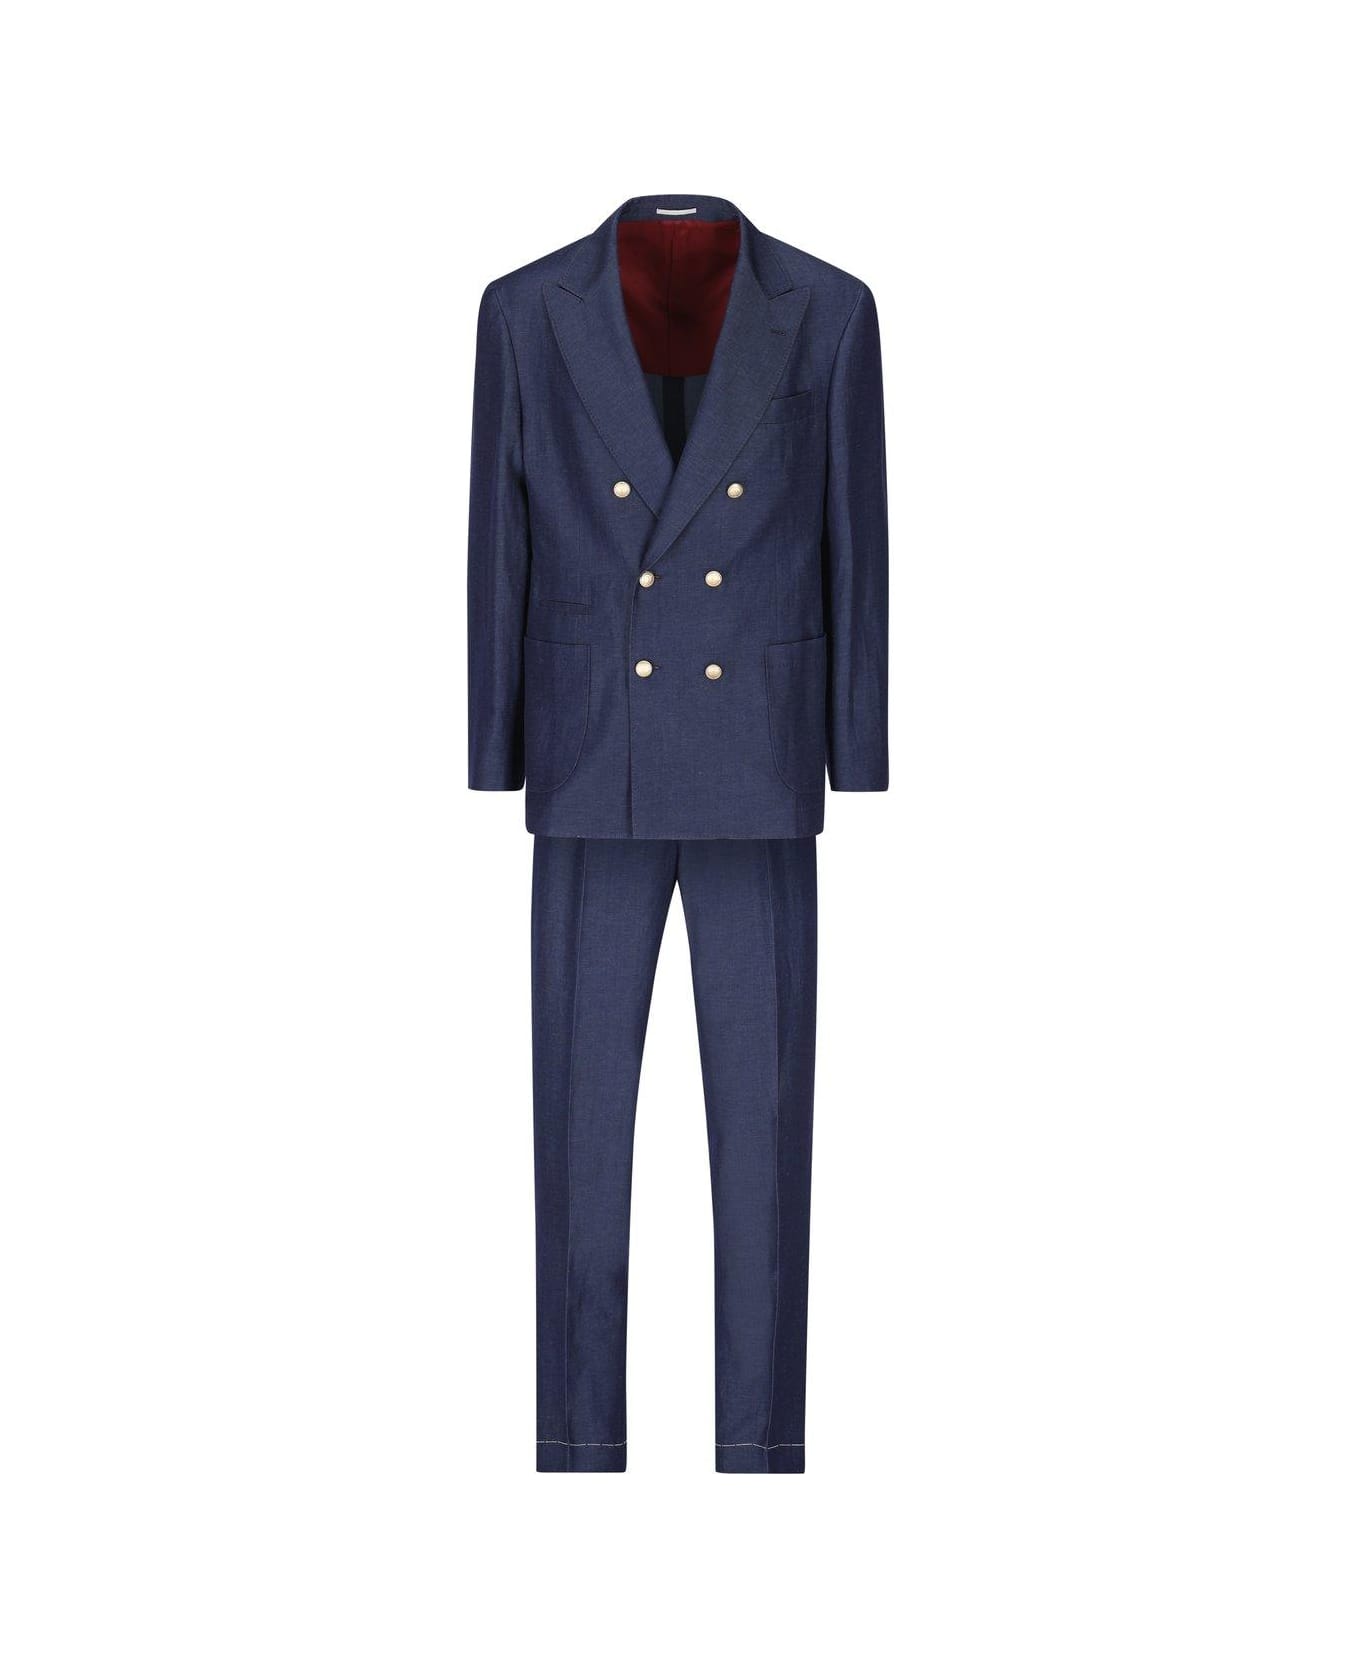 Brunello Cucinelli Double-breasted Suit - BLU スーツ